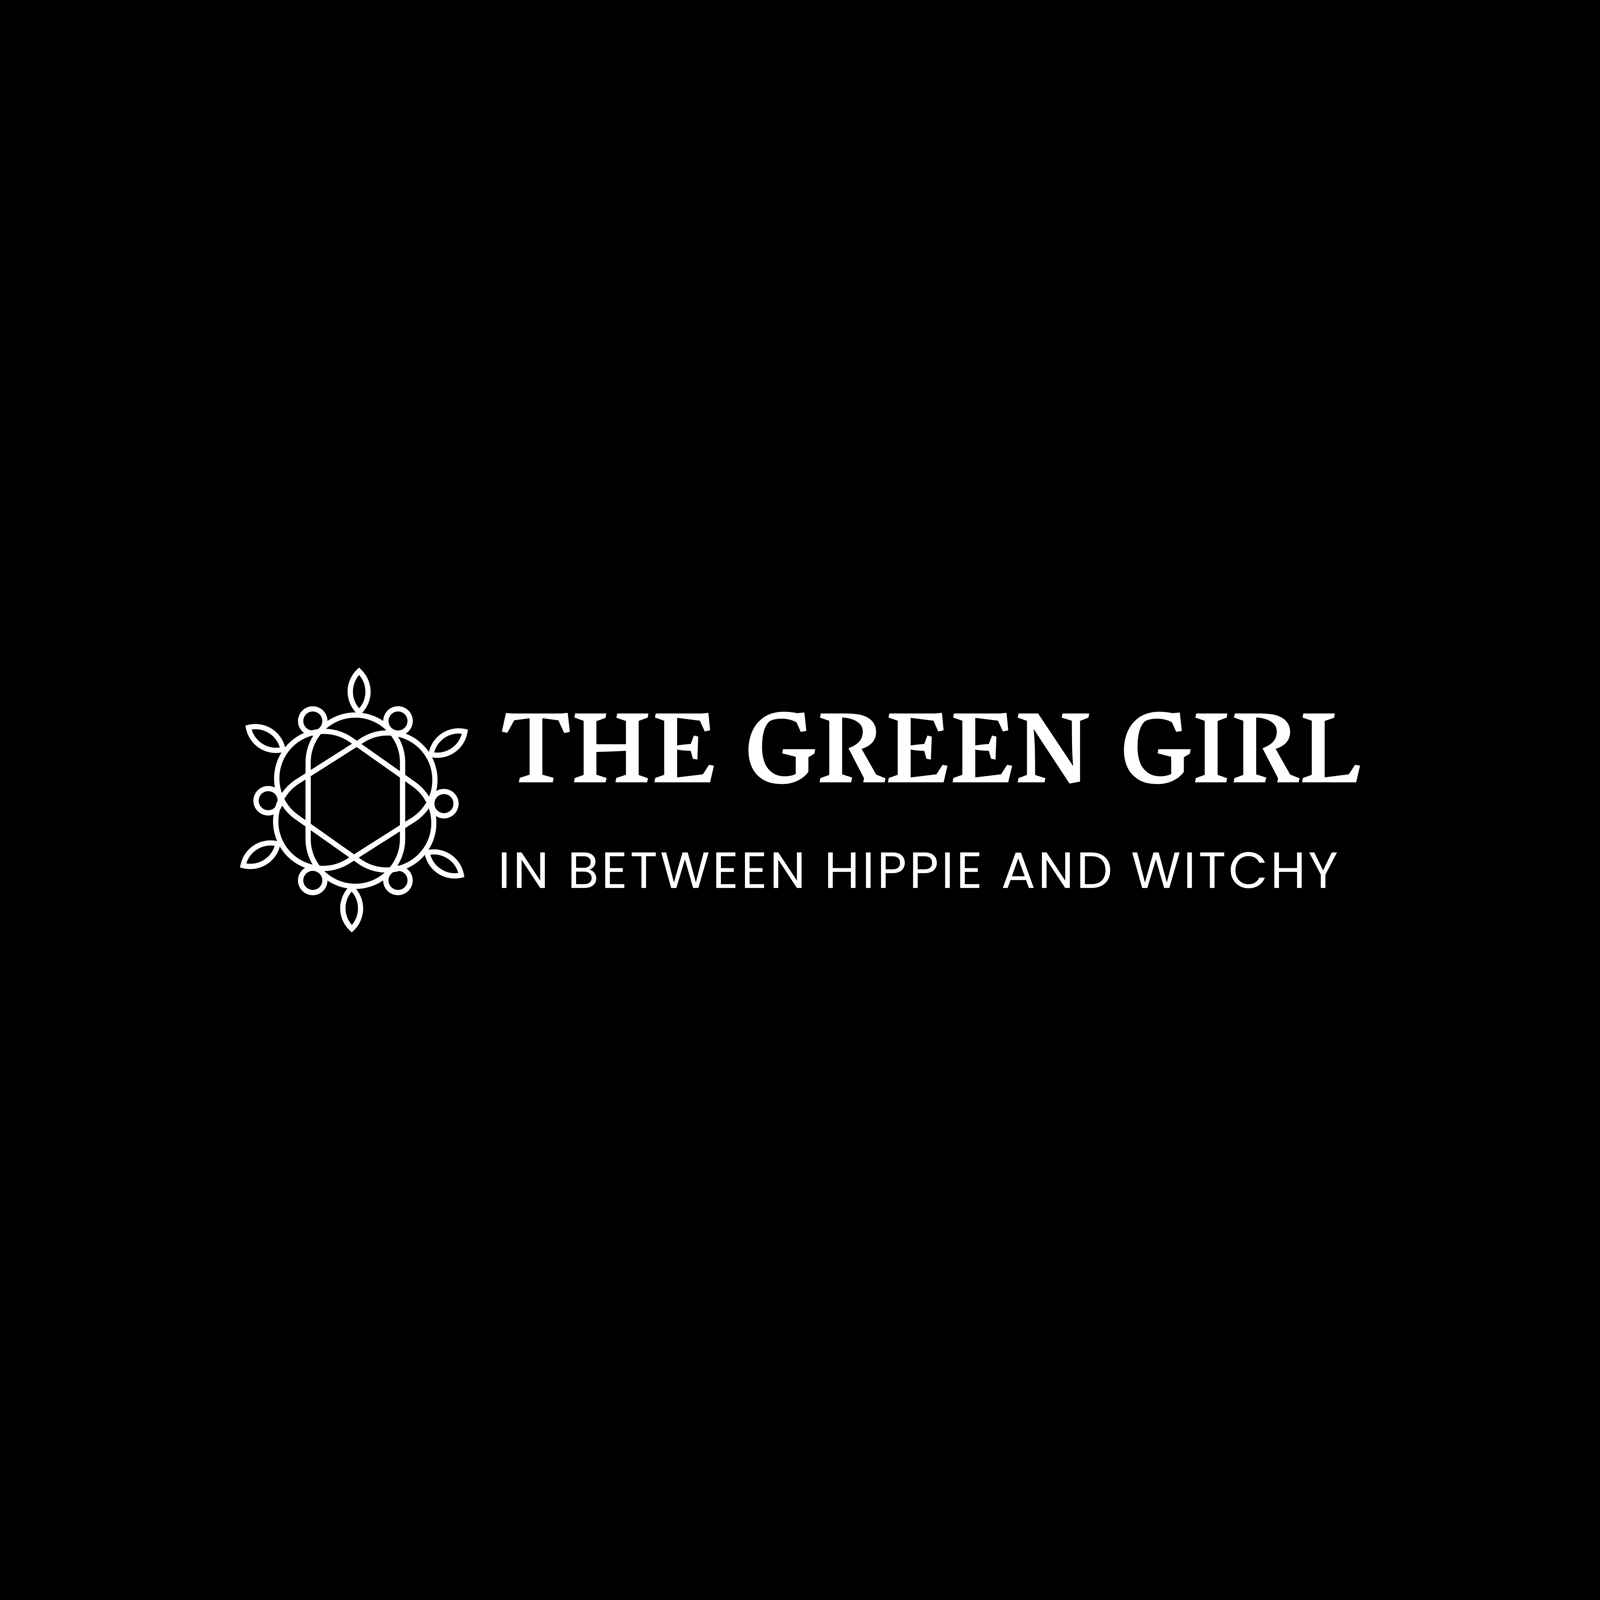 Maintenance The Green Girl